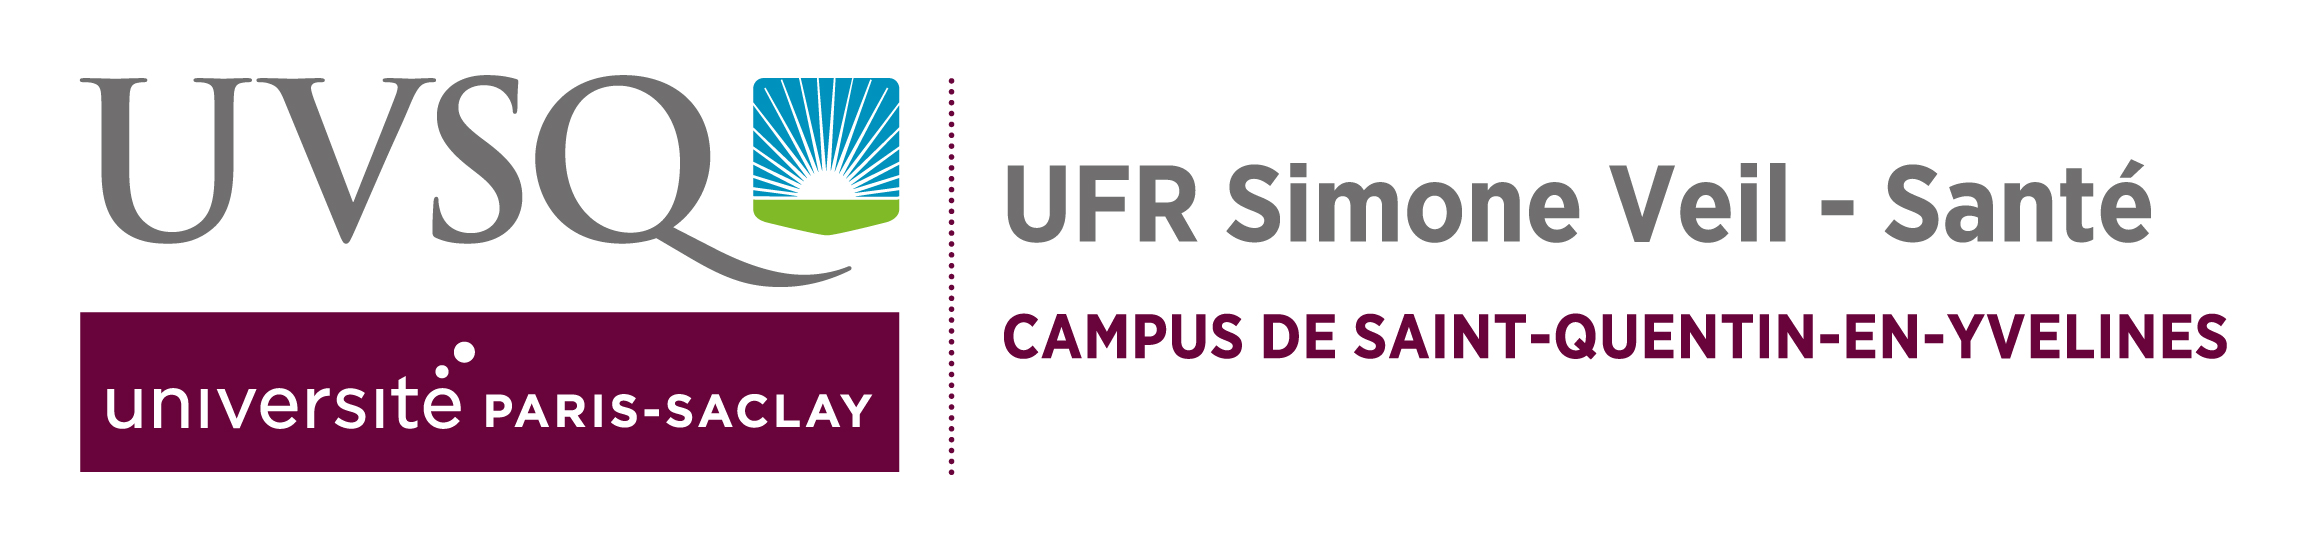 logo-UFR Simone Veil – santé